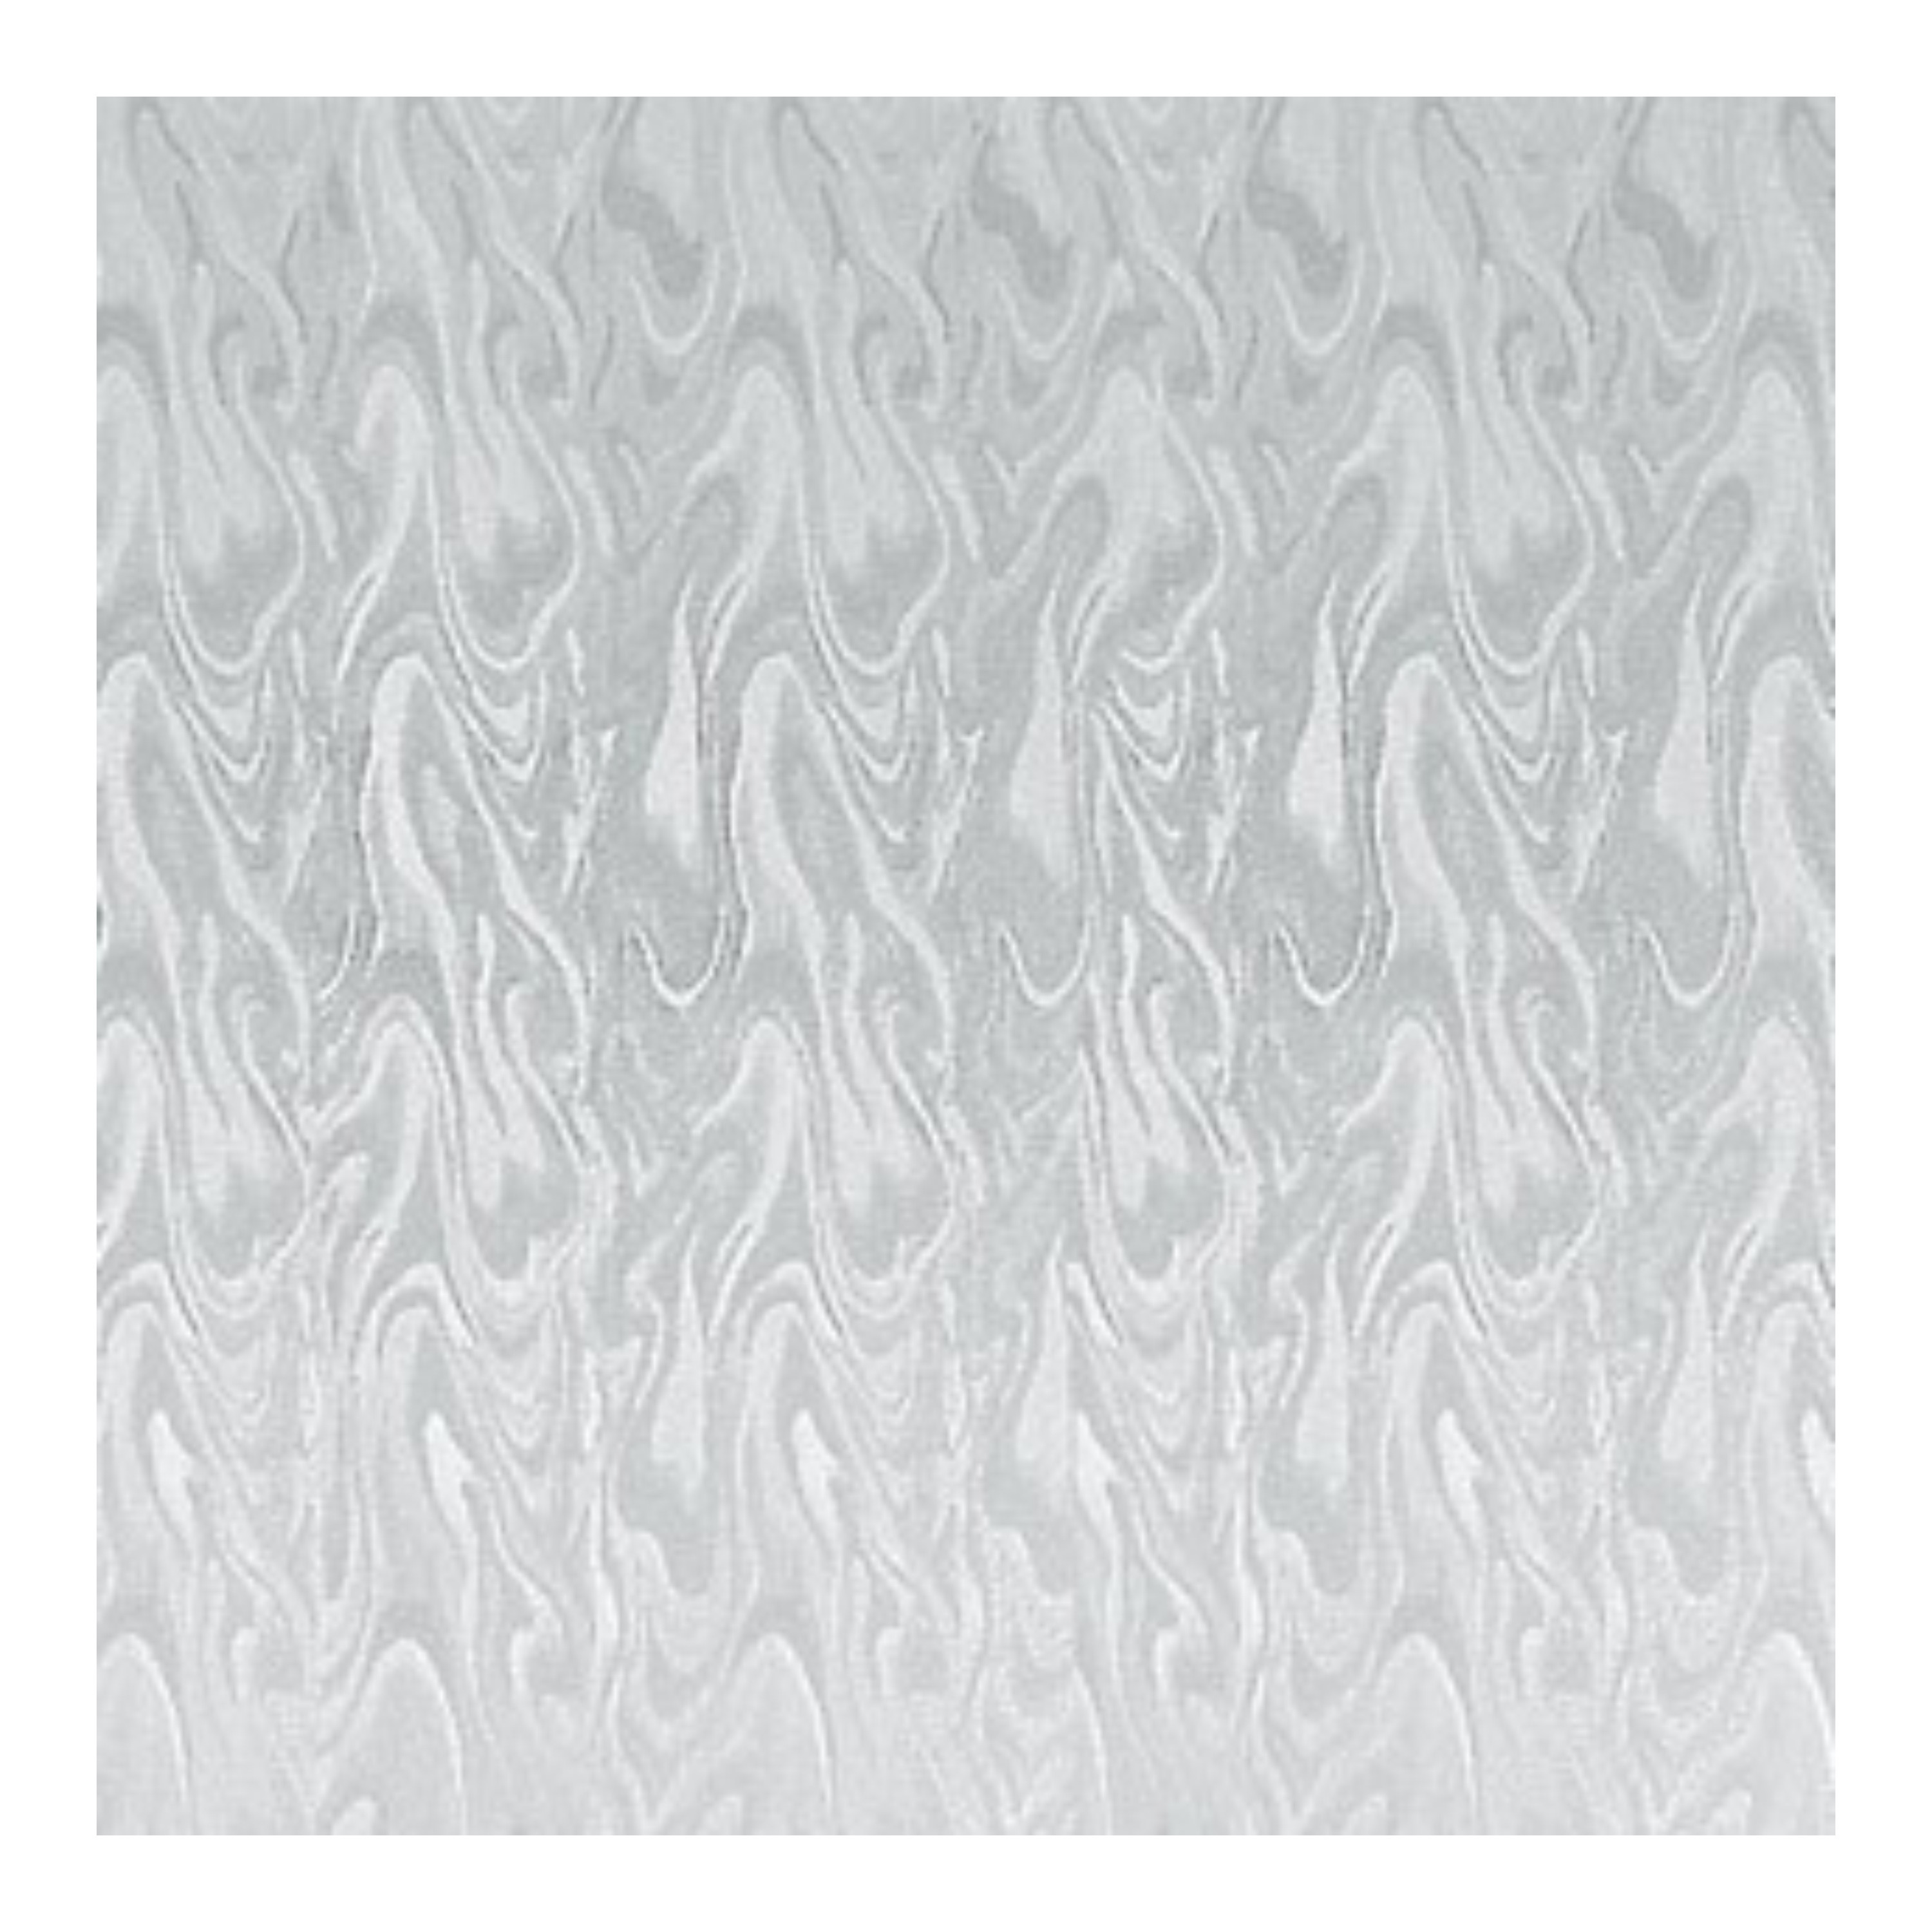 Decoratie plakfolie transparant golven patroon 45 cm x 2 meter zelfklevend